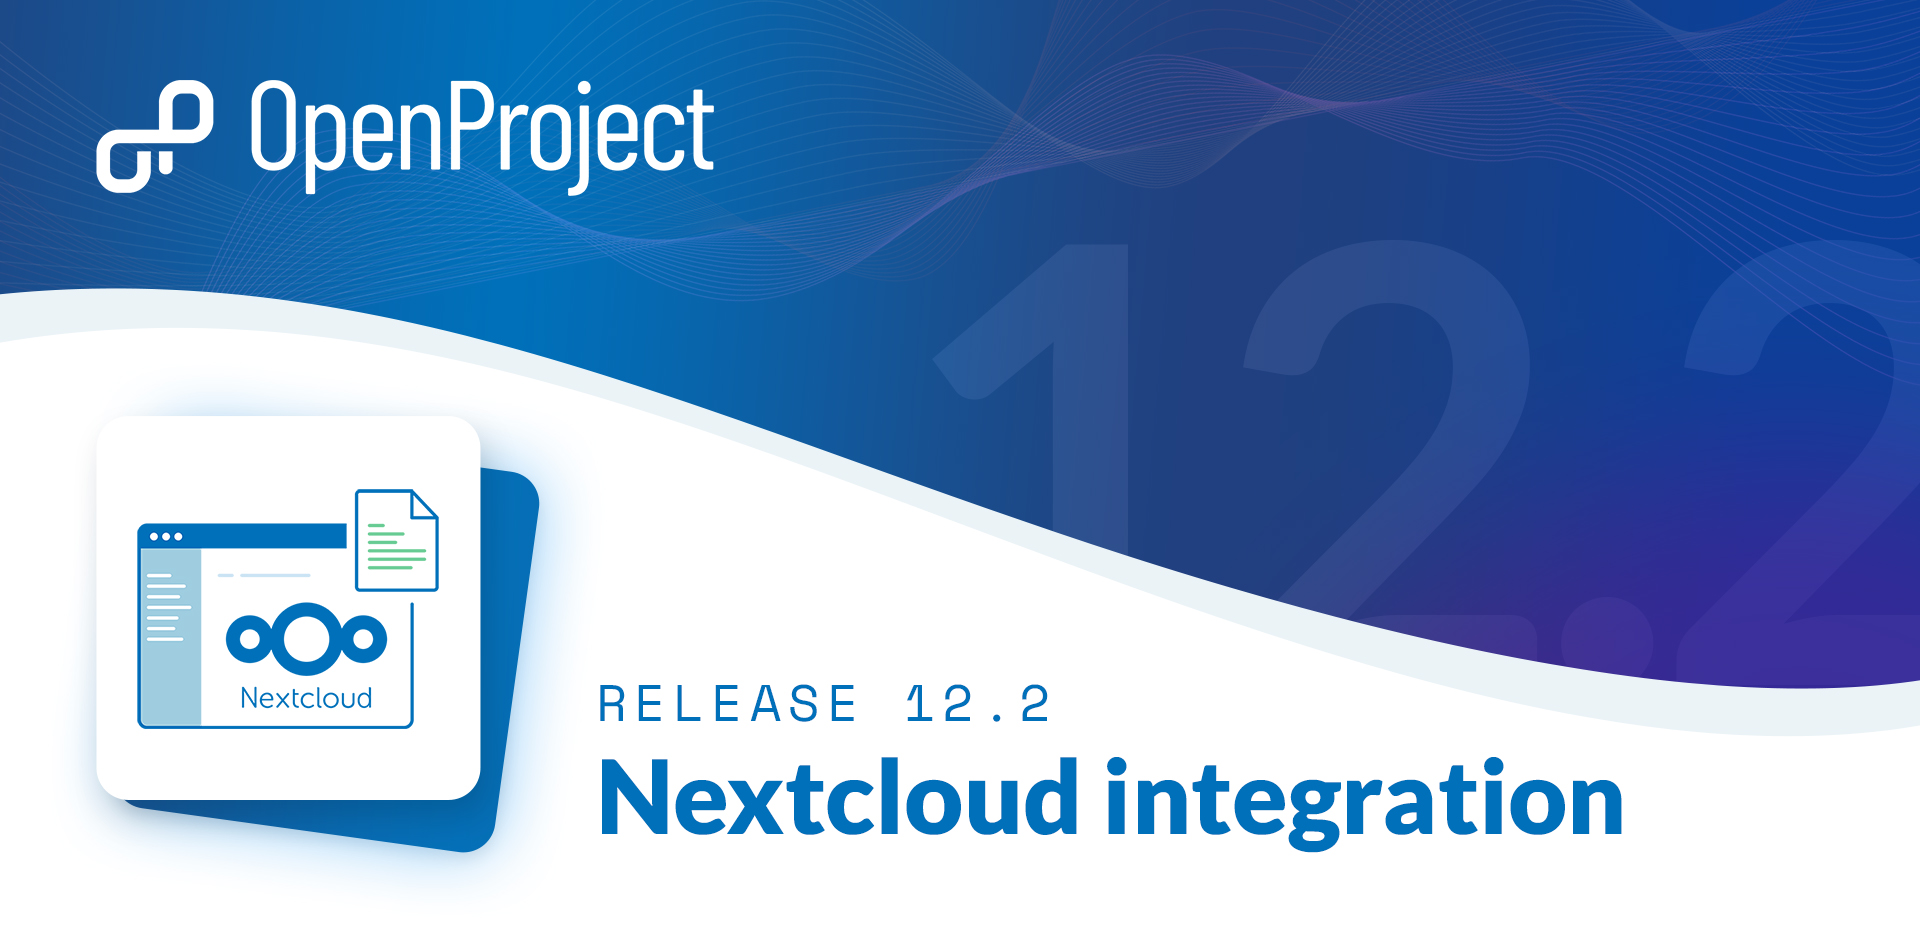 OpenProject 12.2 Nextcloud integration